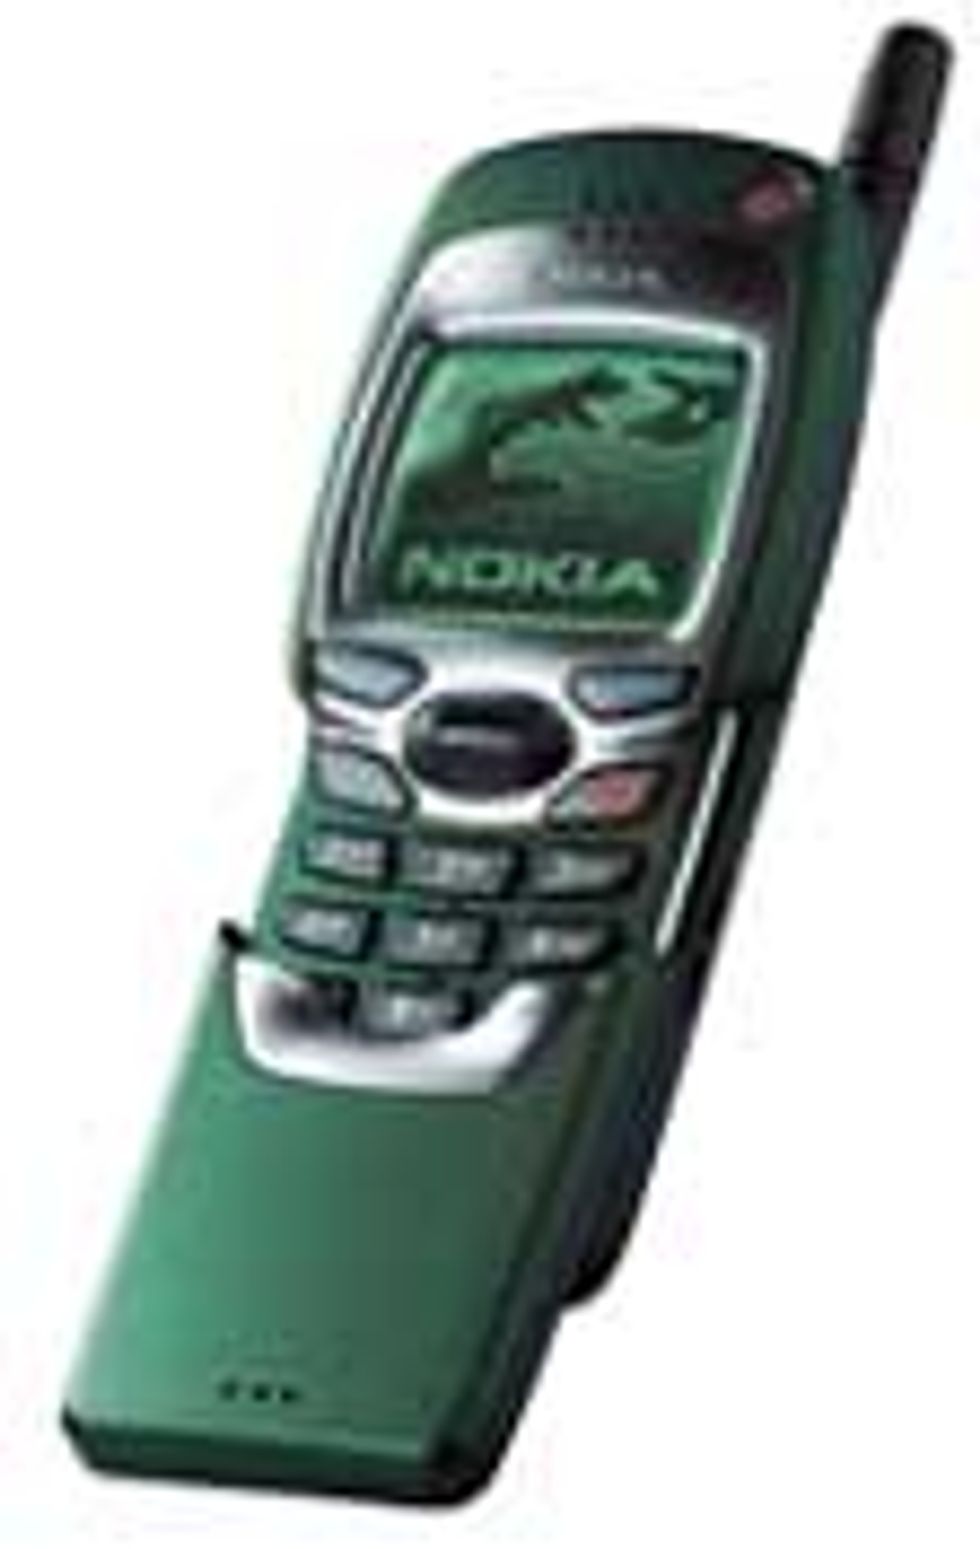 nokia 7110 mobile phone